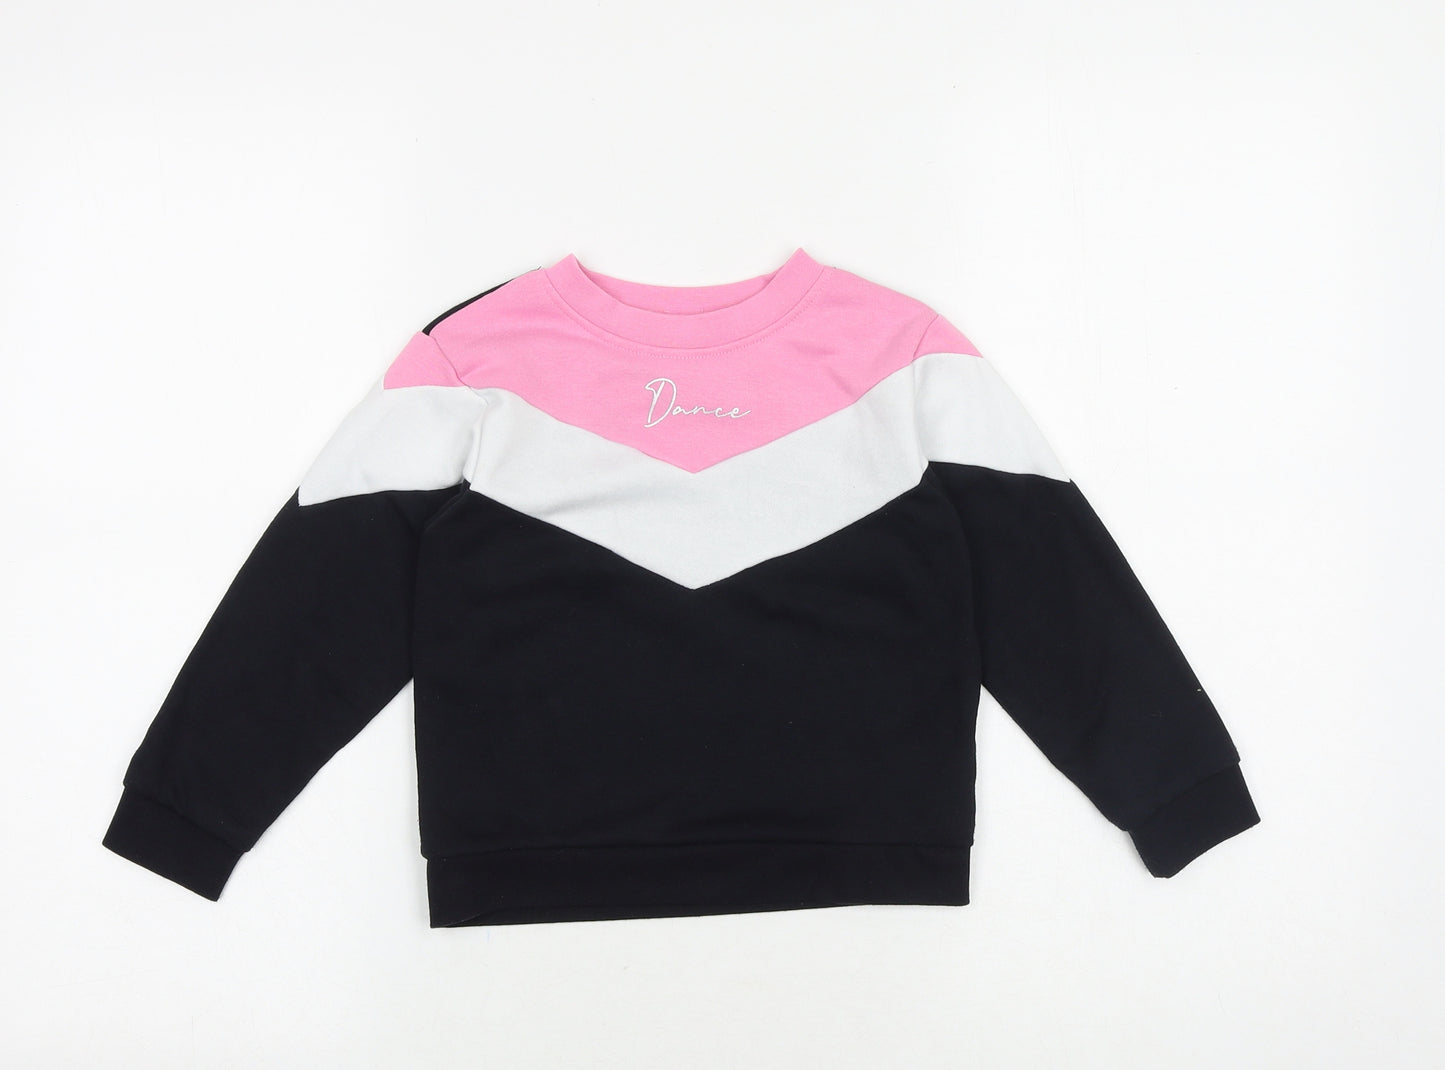 Matalan Girls Black Geometric Cotton Pullover Sweatshirt Size 6-7 Years Pullover - Dance